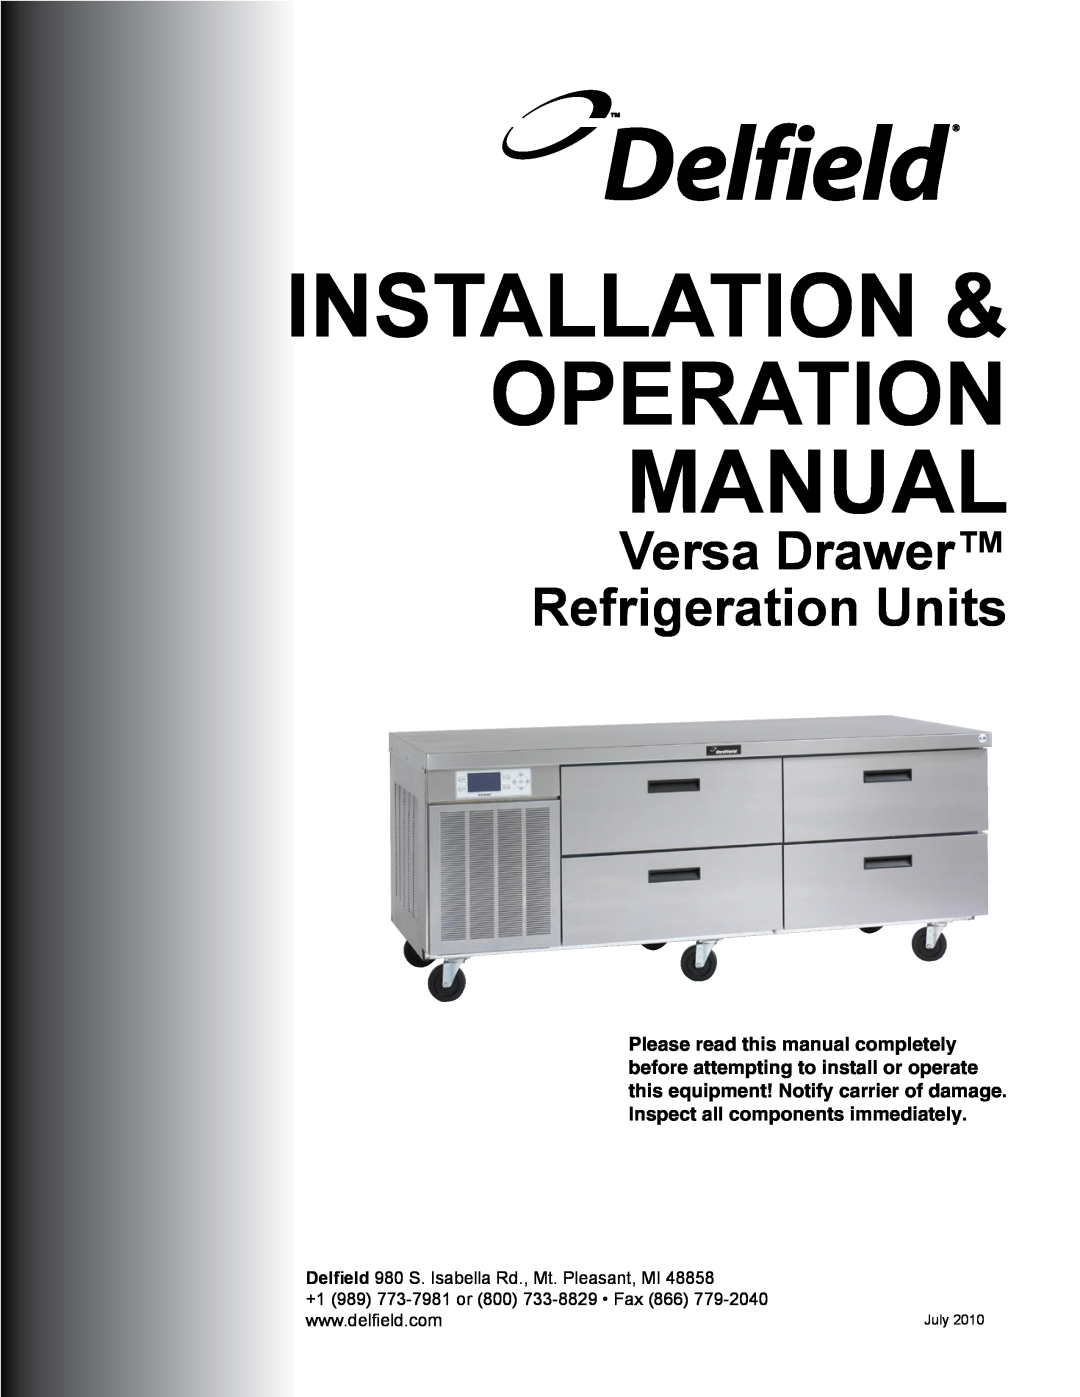 Delfield 18600VD manual Versa Drawer Refrigeration Units 